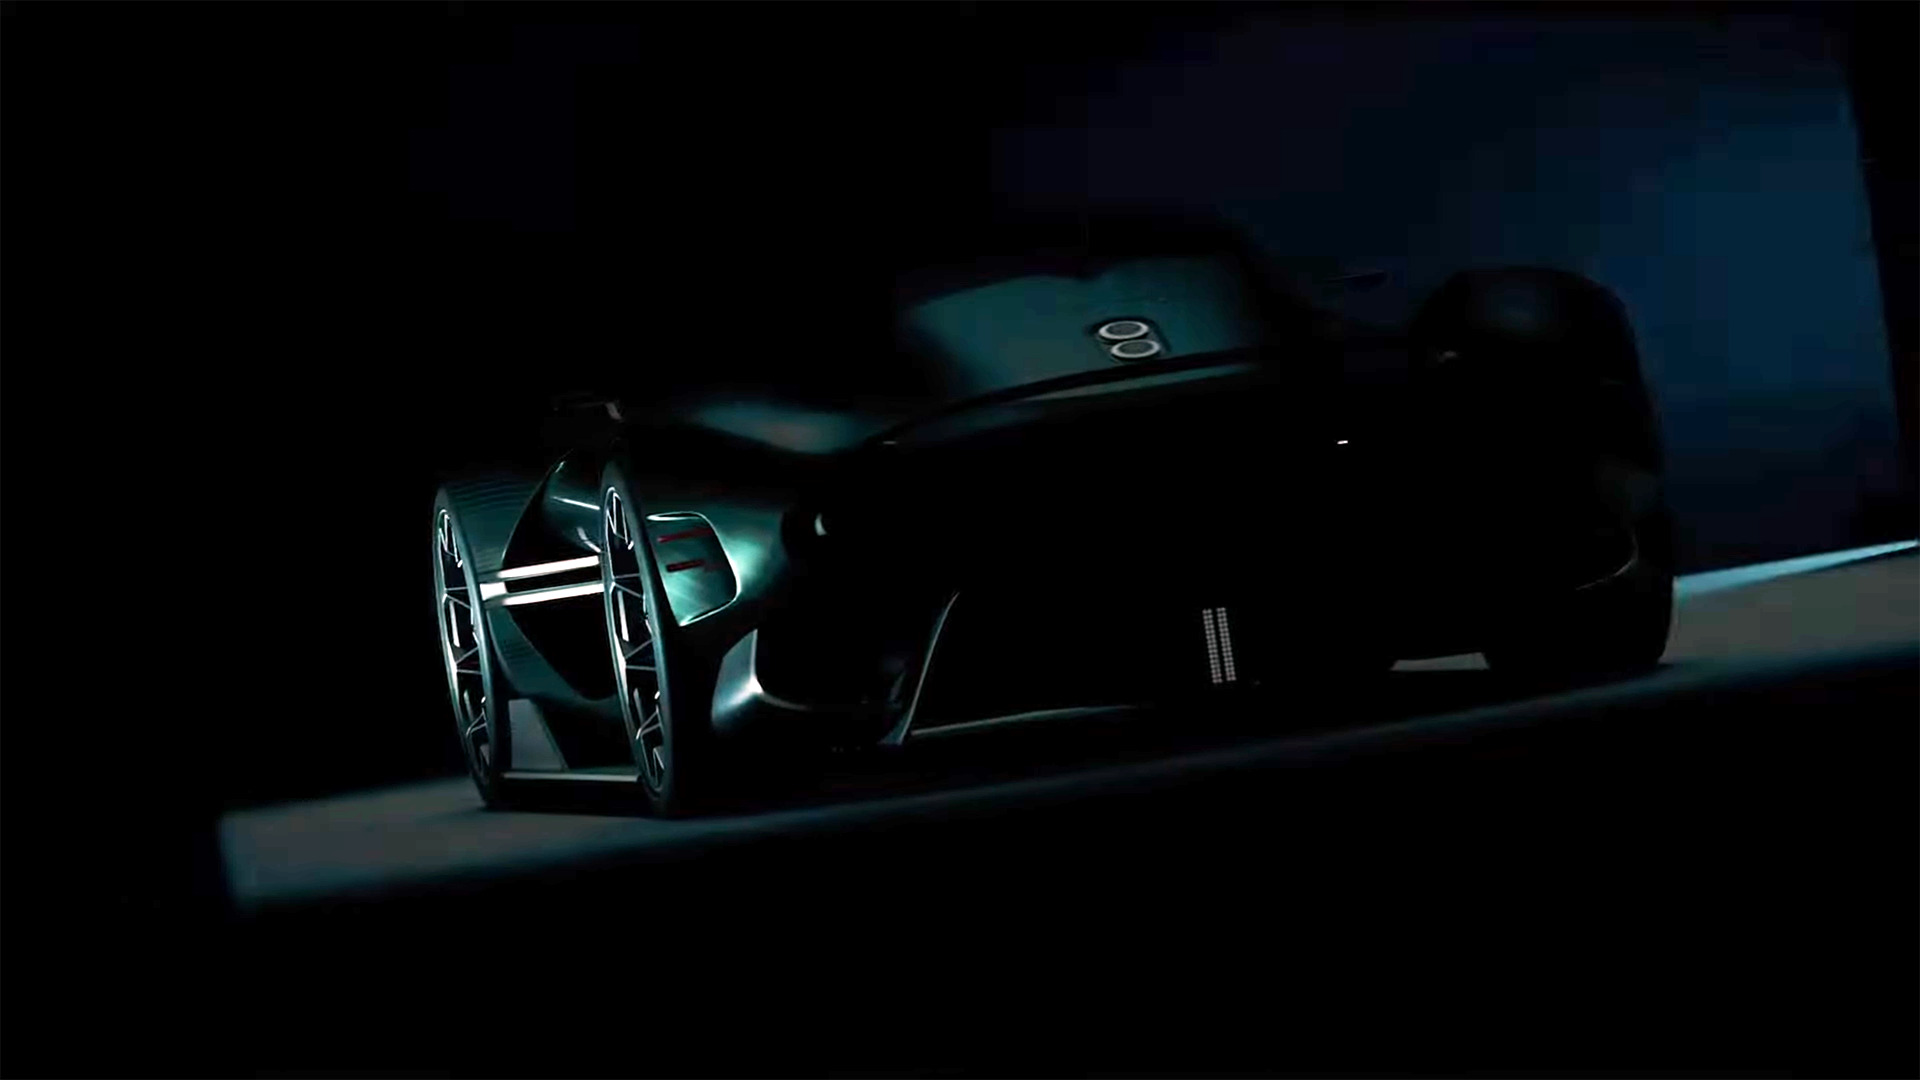 Genesis Reveals X Gran Berlinetta Vision GT for Gran Turismo 7, BVLGARI  Steals the Show - autoevolution